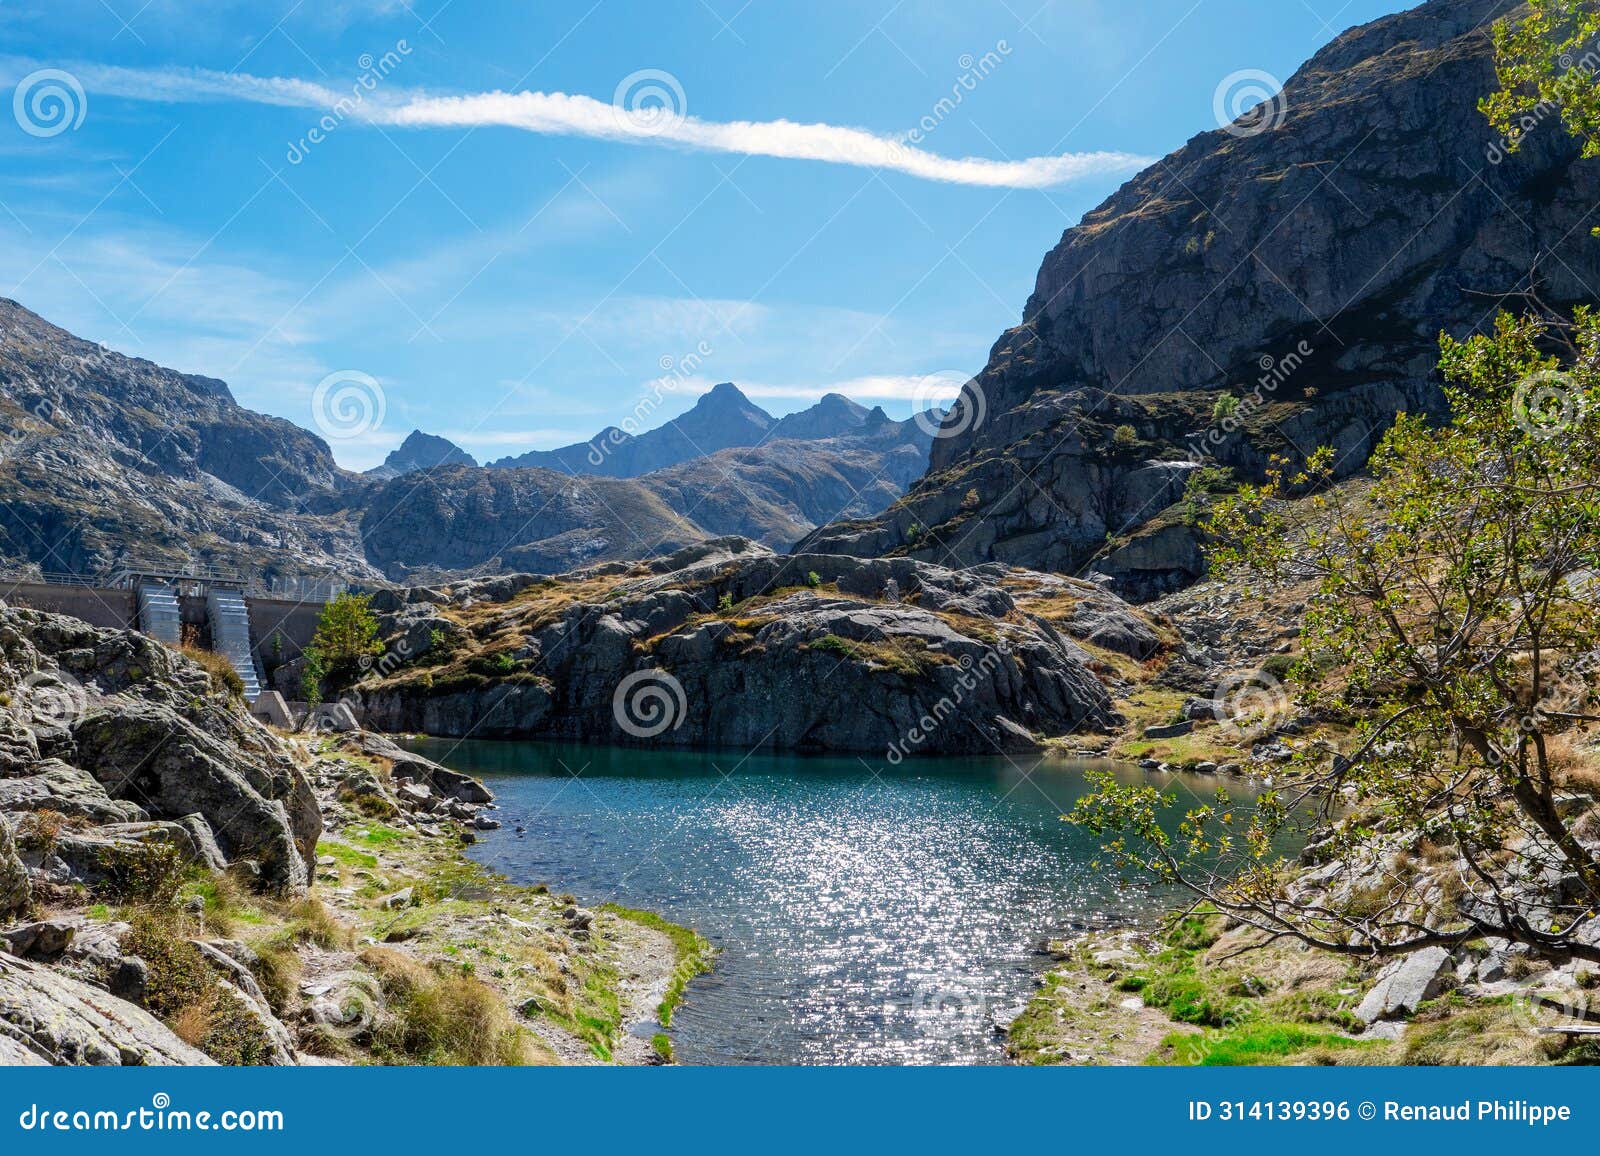 lake d'artouste in the french mountains pyrenees